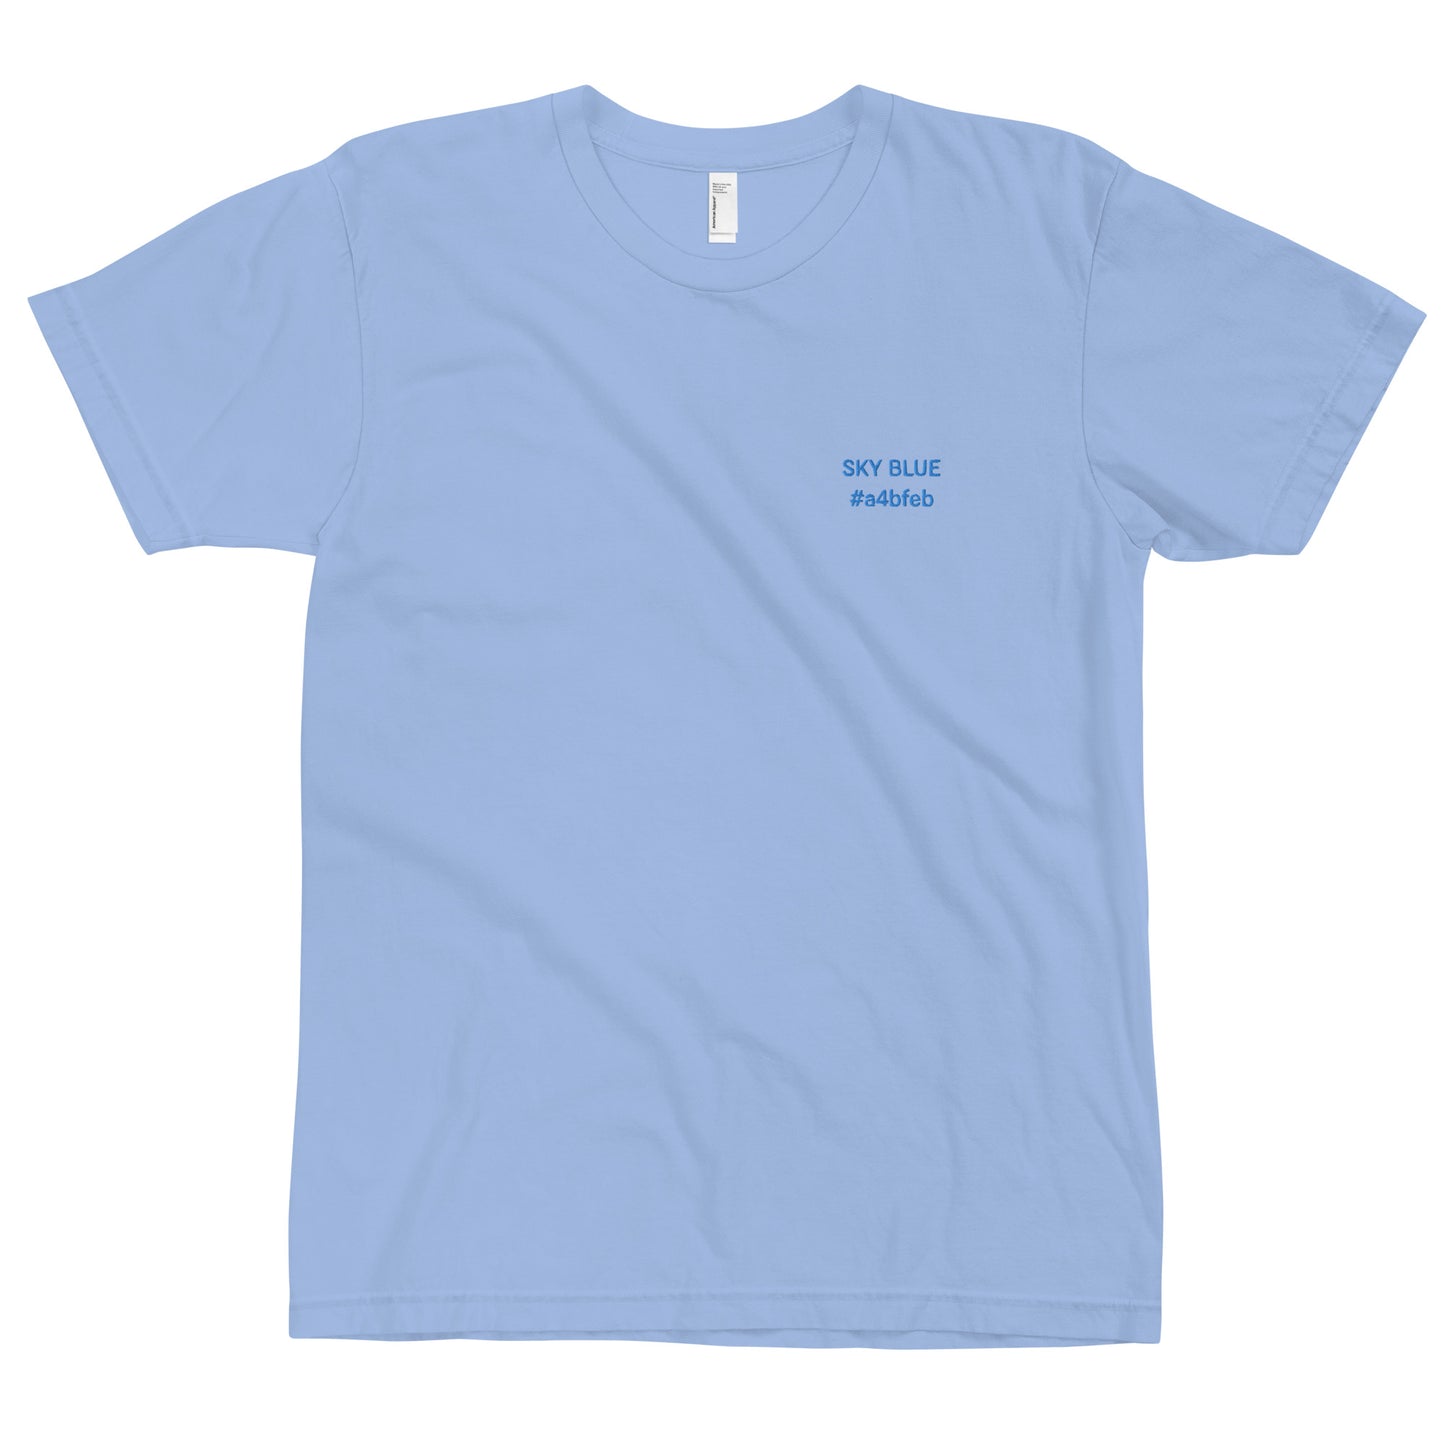 OKKL SKY BLUE #a4bfeb T-shirt